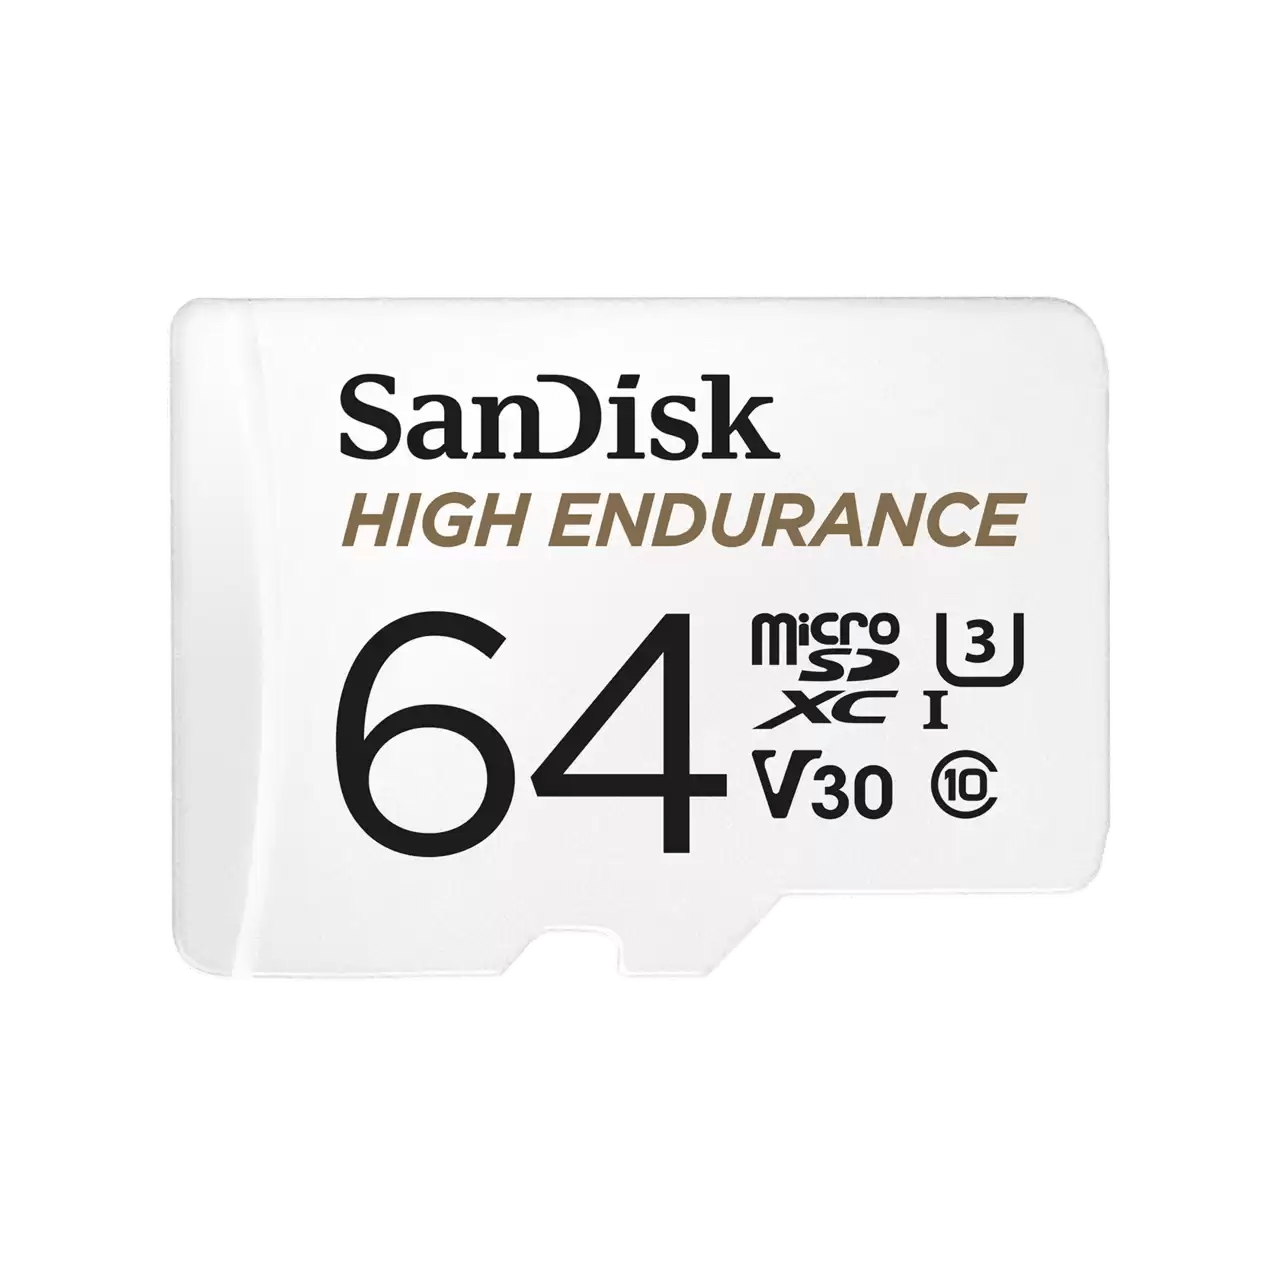 SanDisk High Endurance 64GB V30 U3 C10 UHS - I microSDXC 記憶卡 (SDSQQNR - 064G - GN6IA) - Fever Electrics 電器熱網購平台